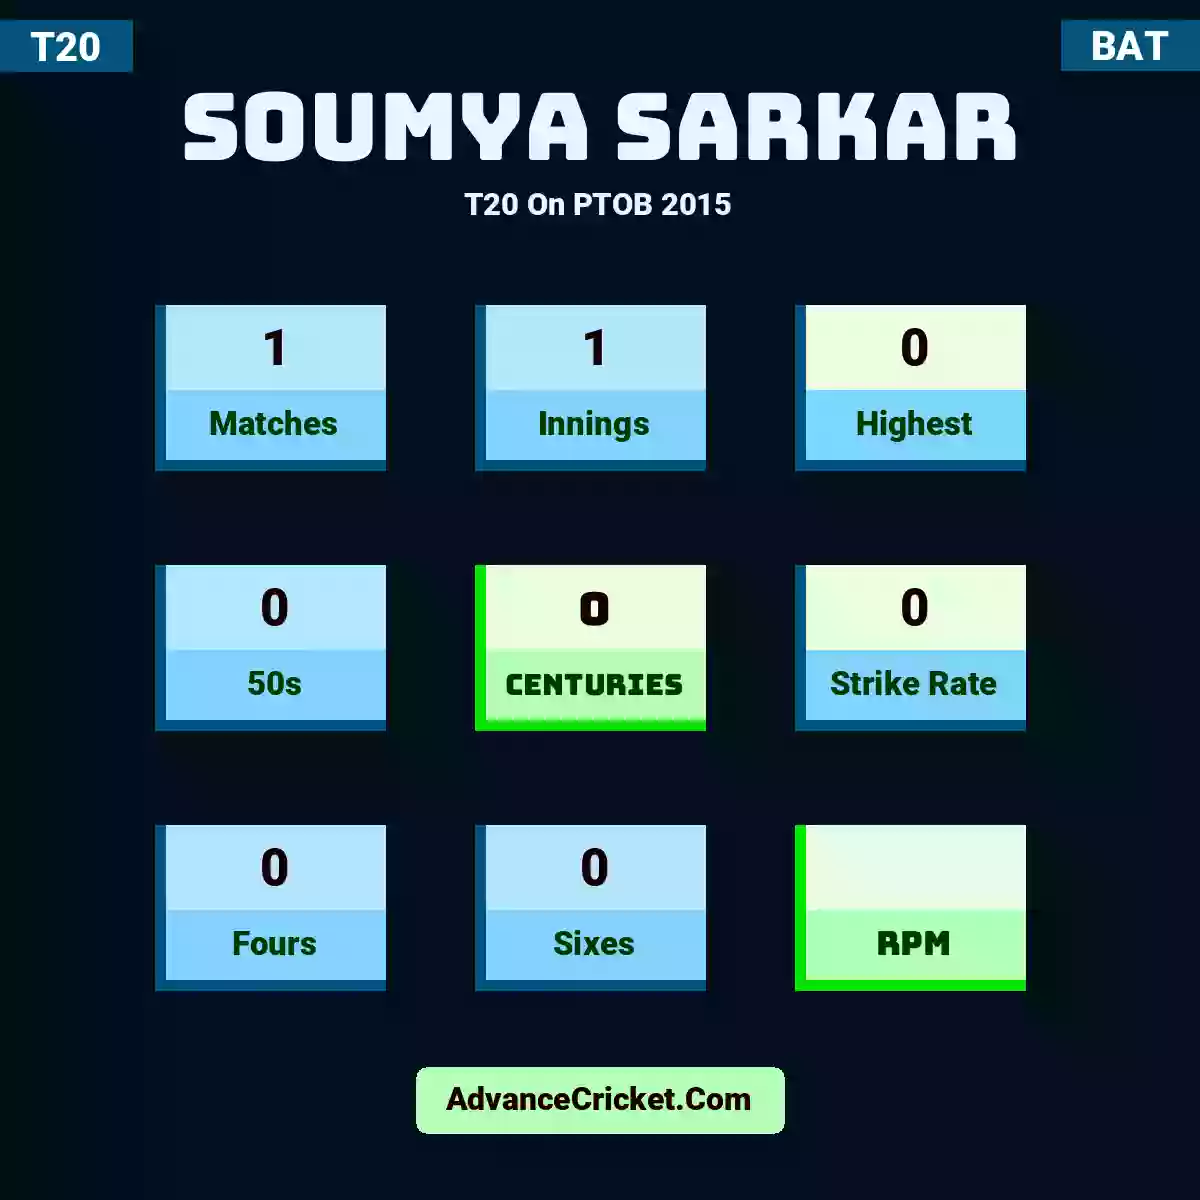 Soumya Sarkar T20  On PTOB 2015, Soumya Sarkar played 1 matches, scored 0 runs as highest, 0 half-centuries, and 0 centuries, with a strike rate of 0. S.Sarkar hit 0 fours and 0 sixes.